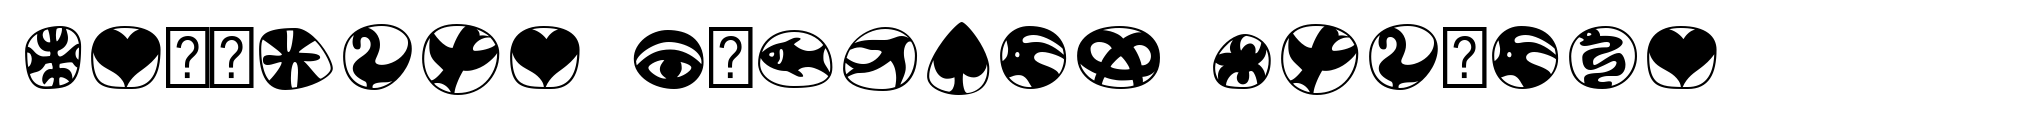 Frutiger Symbols Regular image